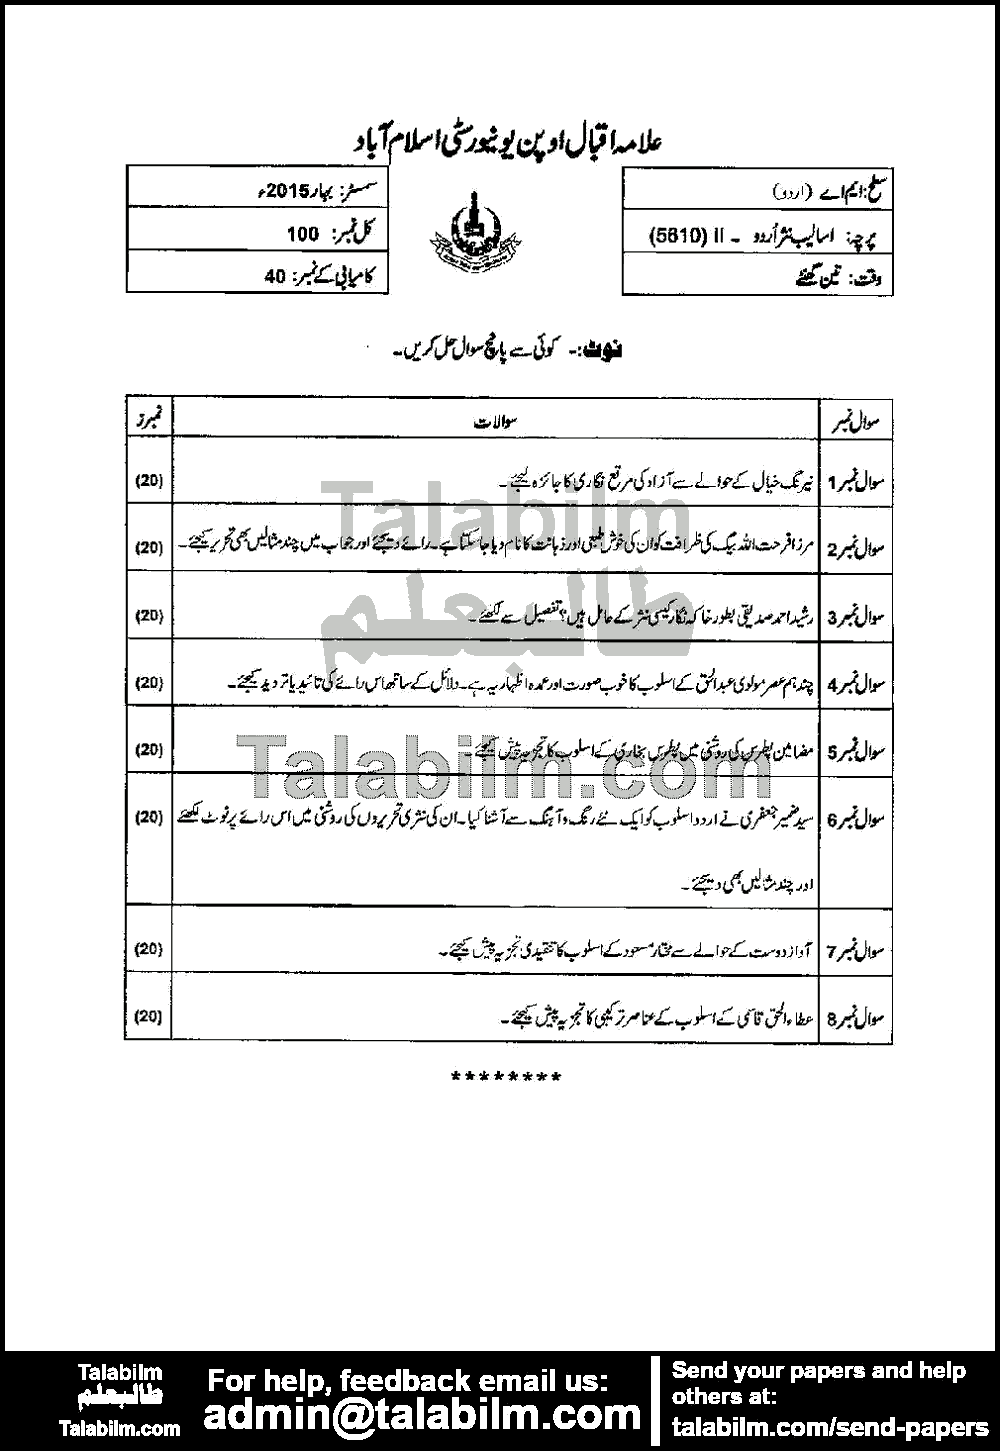 Styles in Urdu Prose-II 5610 past paper for Spring 2015